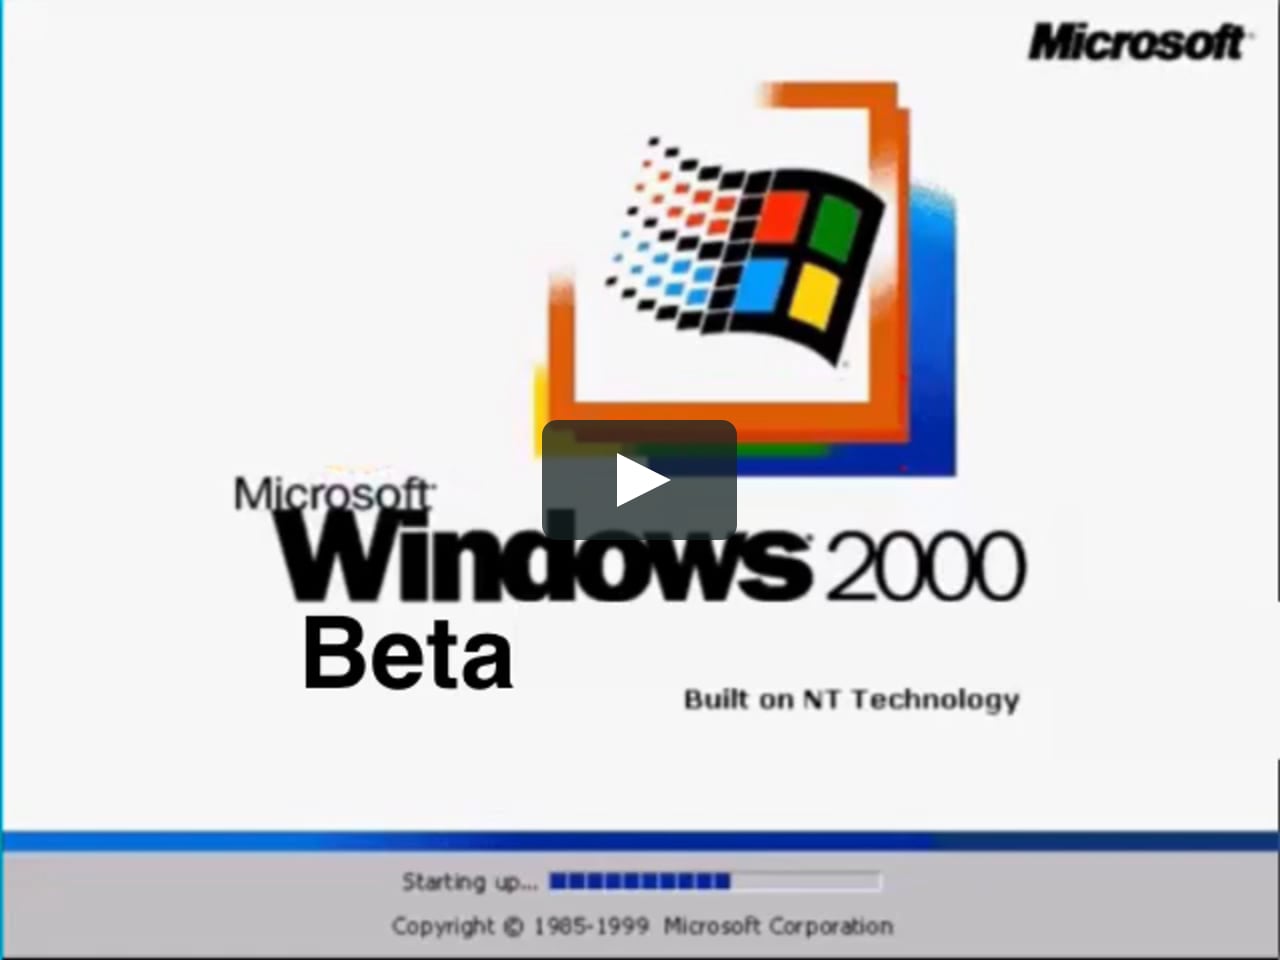 Windows 2000 Logo - Windows 2000 Beta Startup Sound on Vimeo